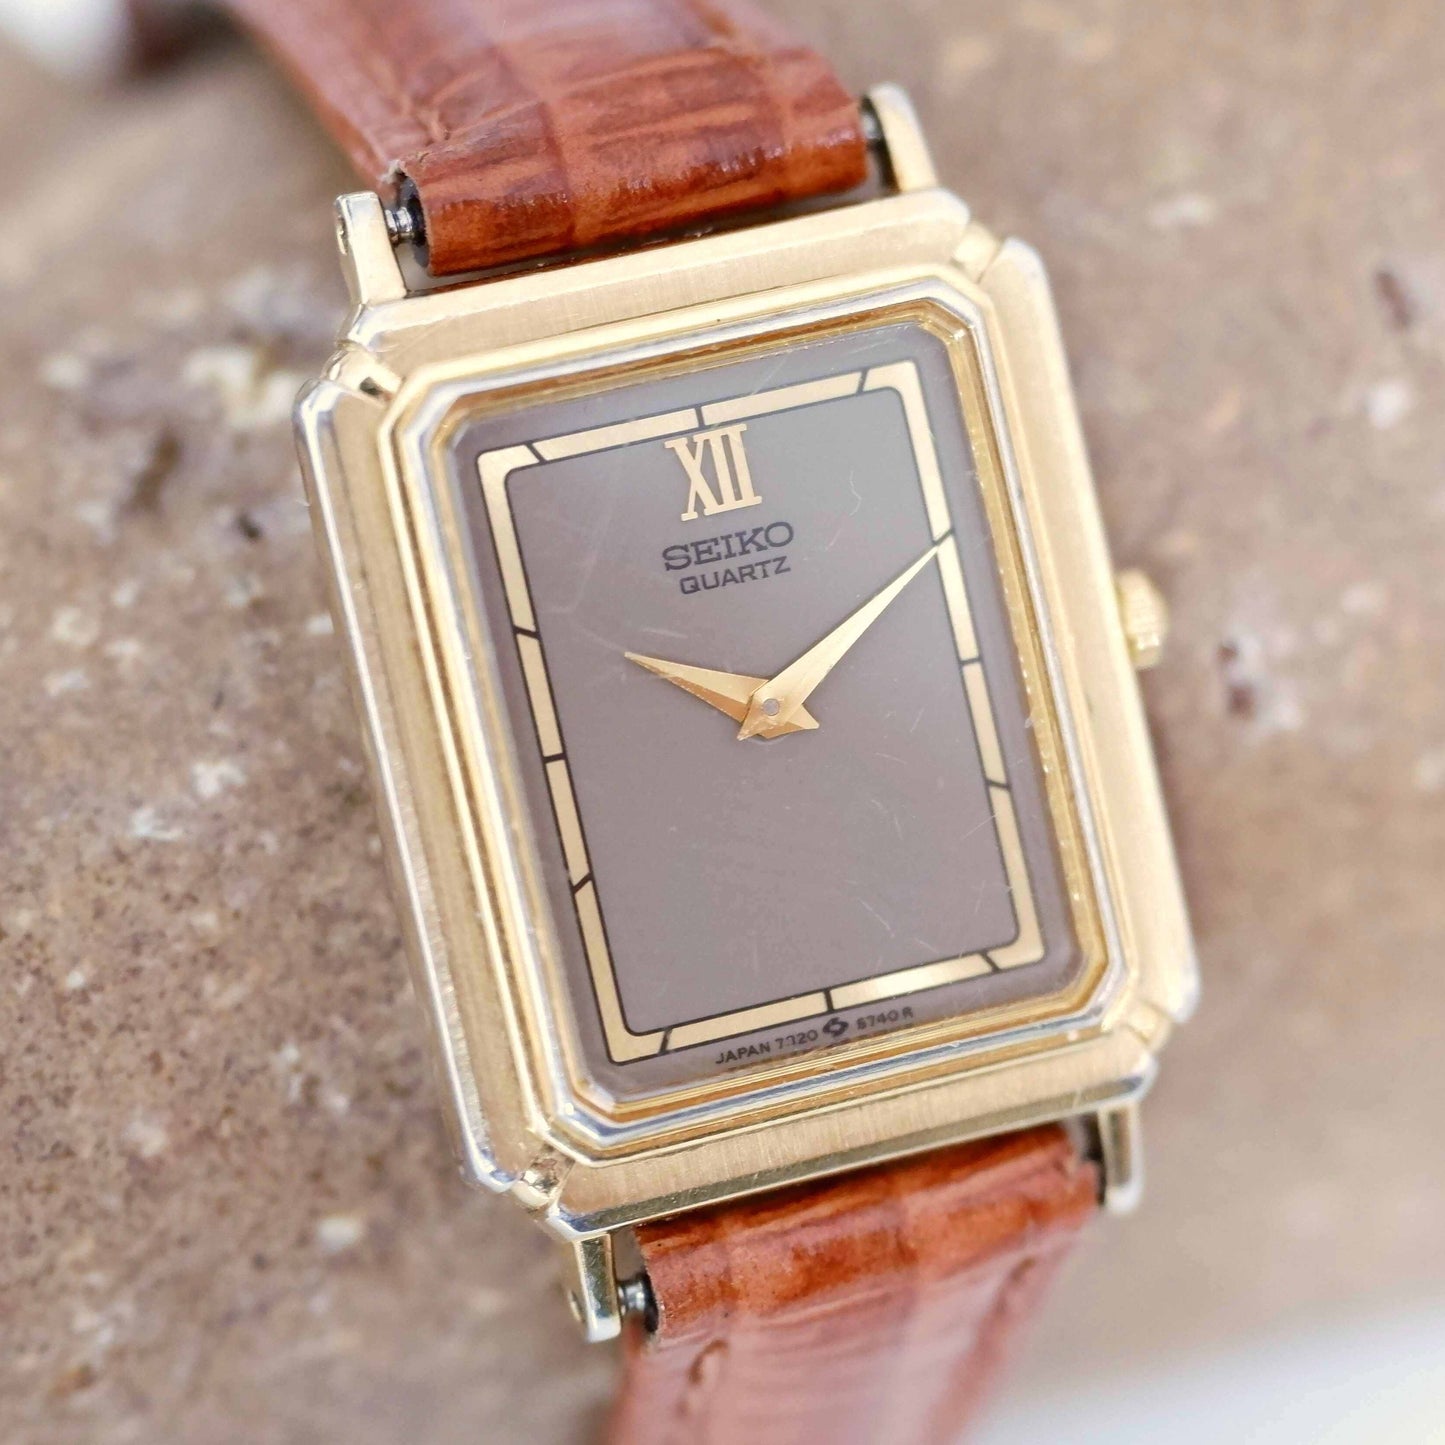 Seiko Vintage Ladies Watch: 90s Gold Rectangular Style Elegant Roman Dial | Slight Left Side